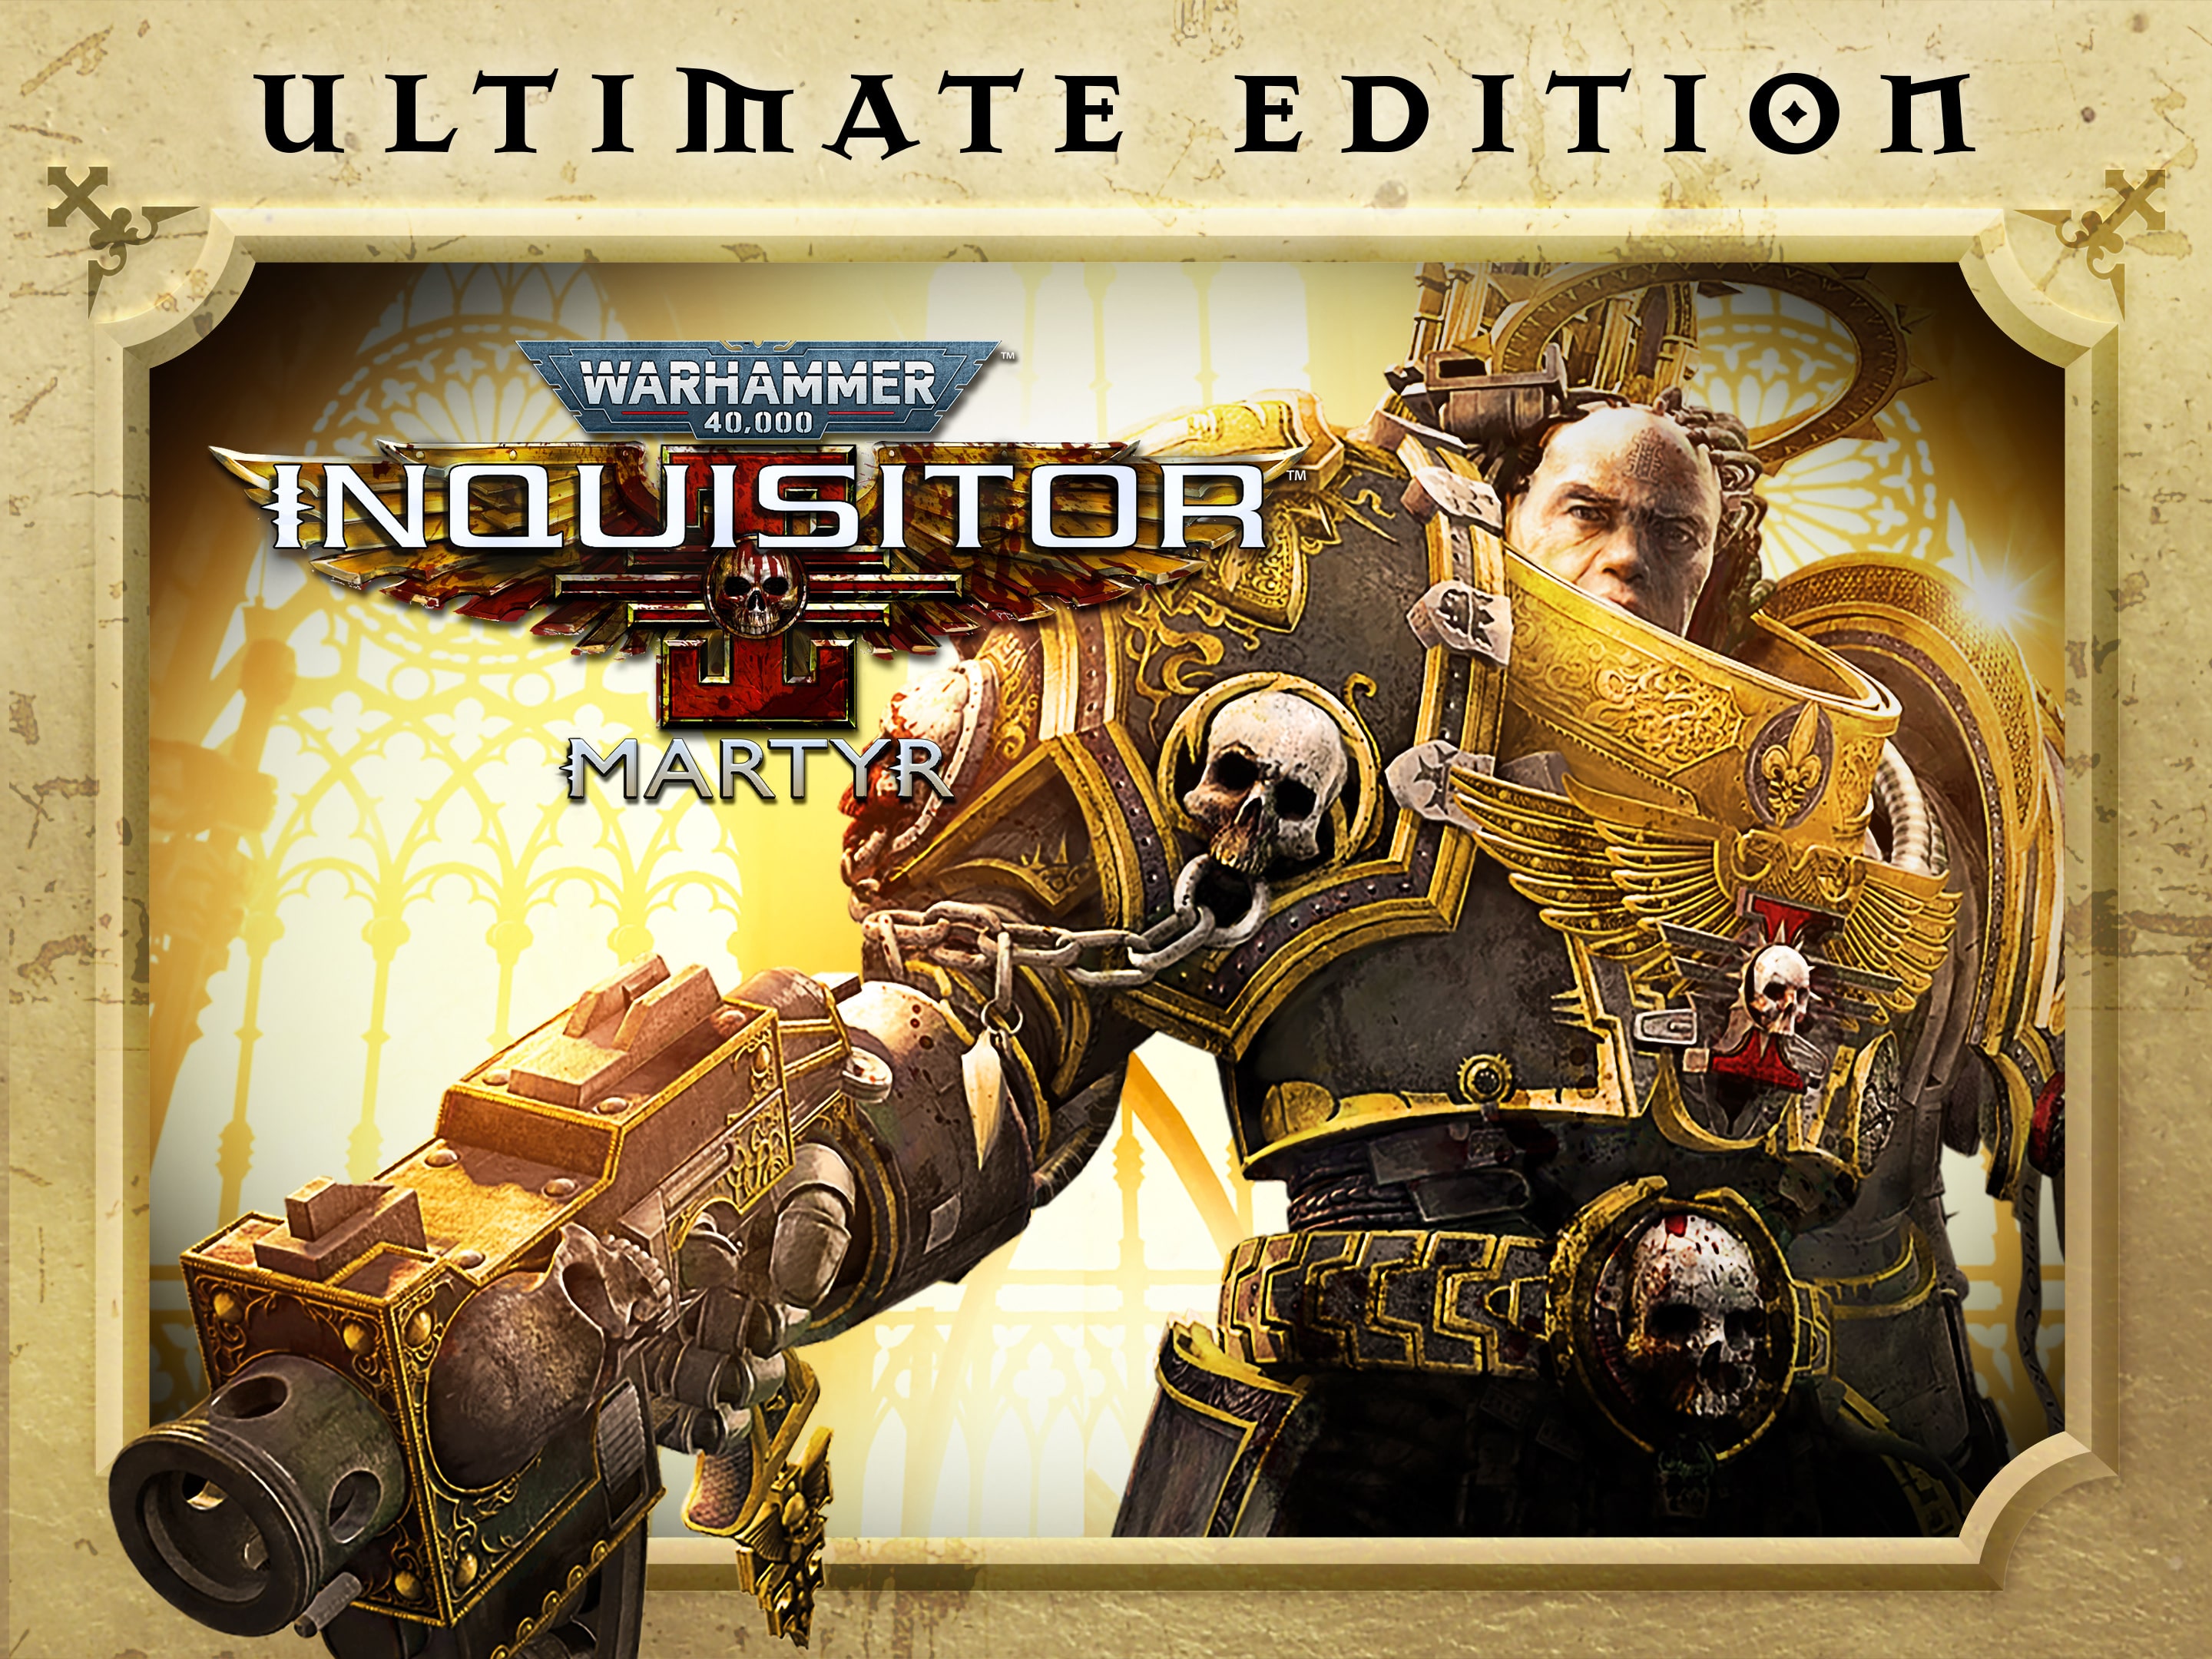 Inquisitor Martyr ps4. Warhammer 40000 ps4. Warhammer 40,000 Inquisitor - Martyr ps4 обложка. Warhammer 40,000: Inquisitor - Martyr complete collection. Warhammer ps4